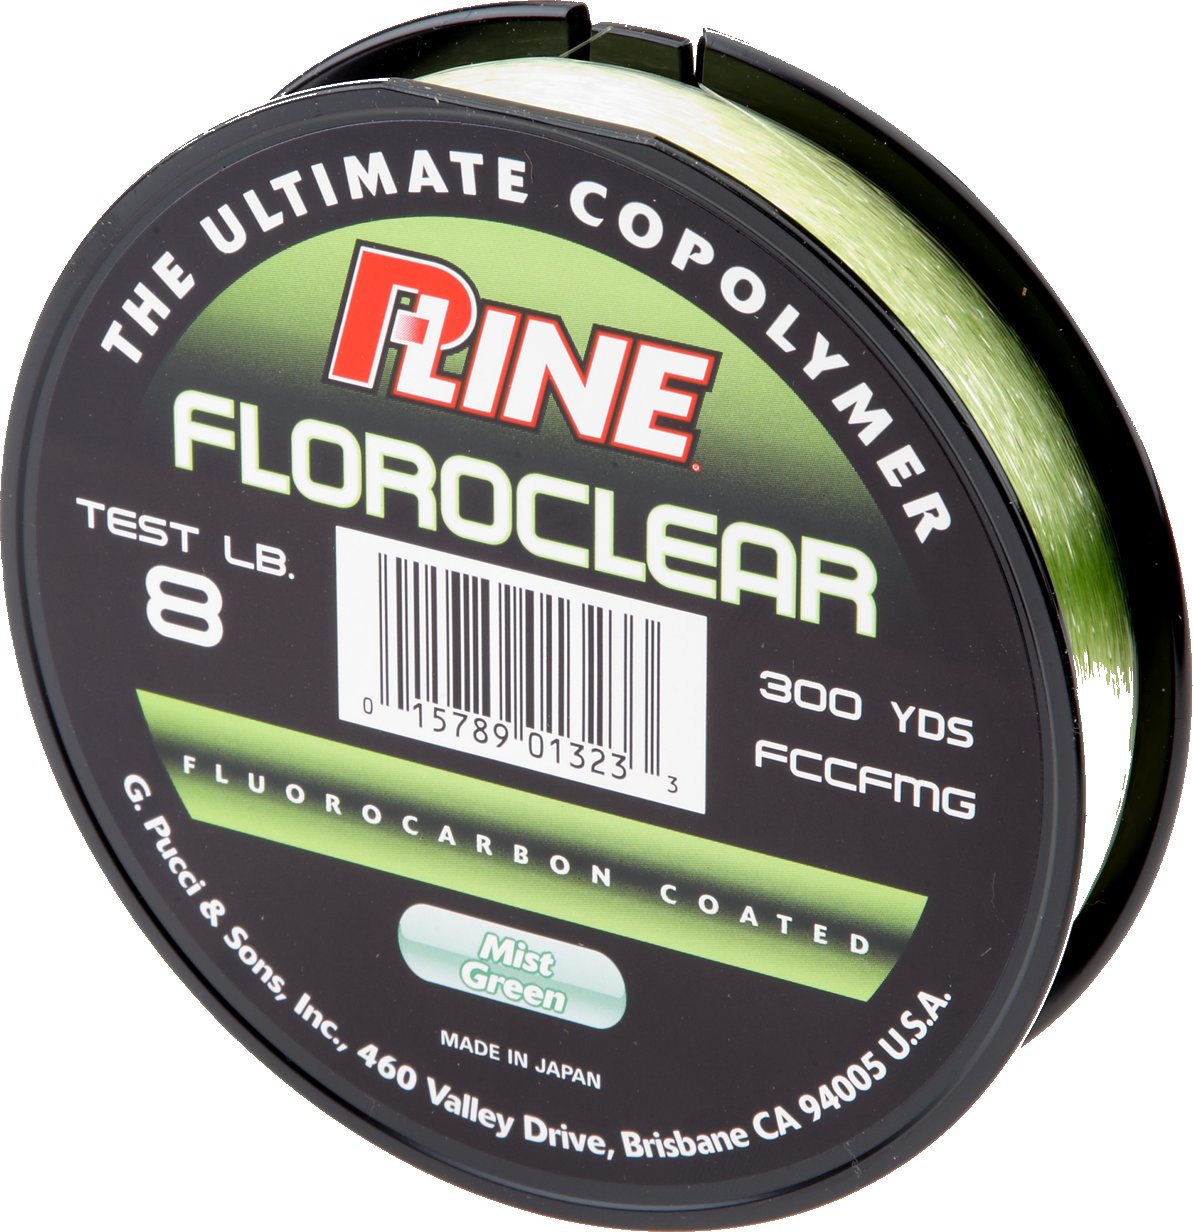 P-Line® Floroclear 8 lb. - 300 yards Fluorocarbon Fishing Line